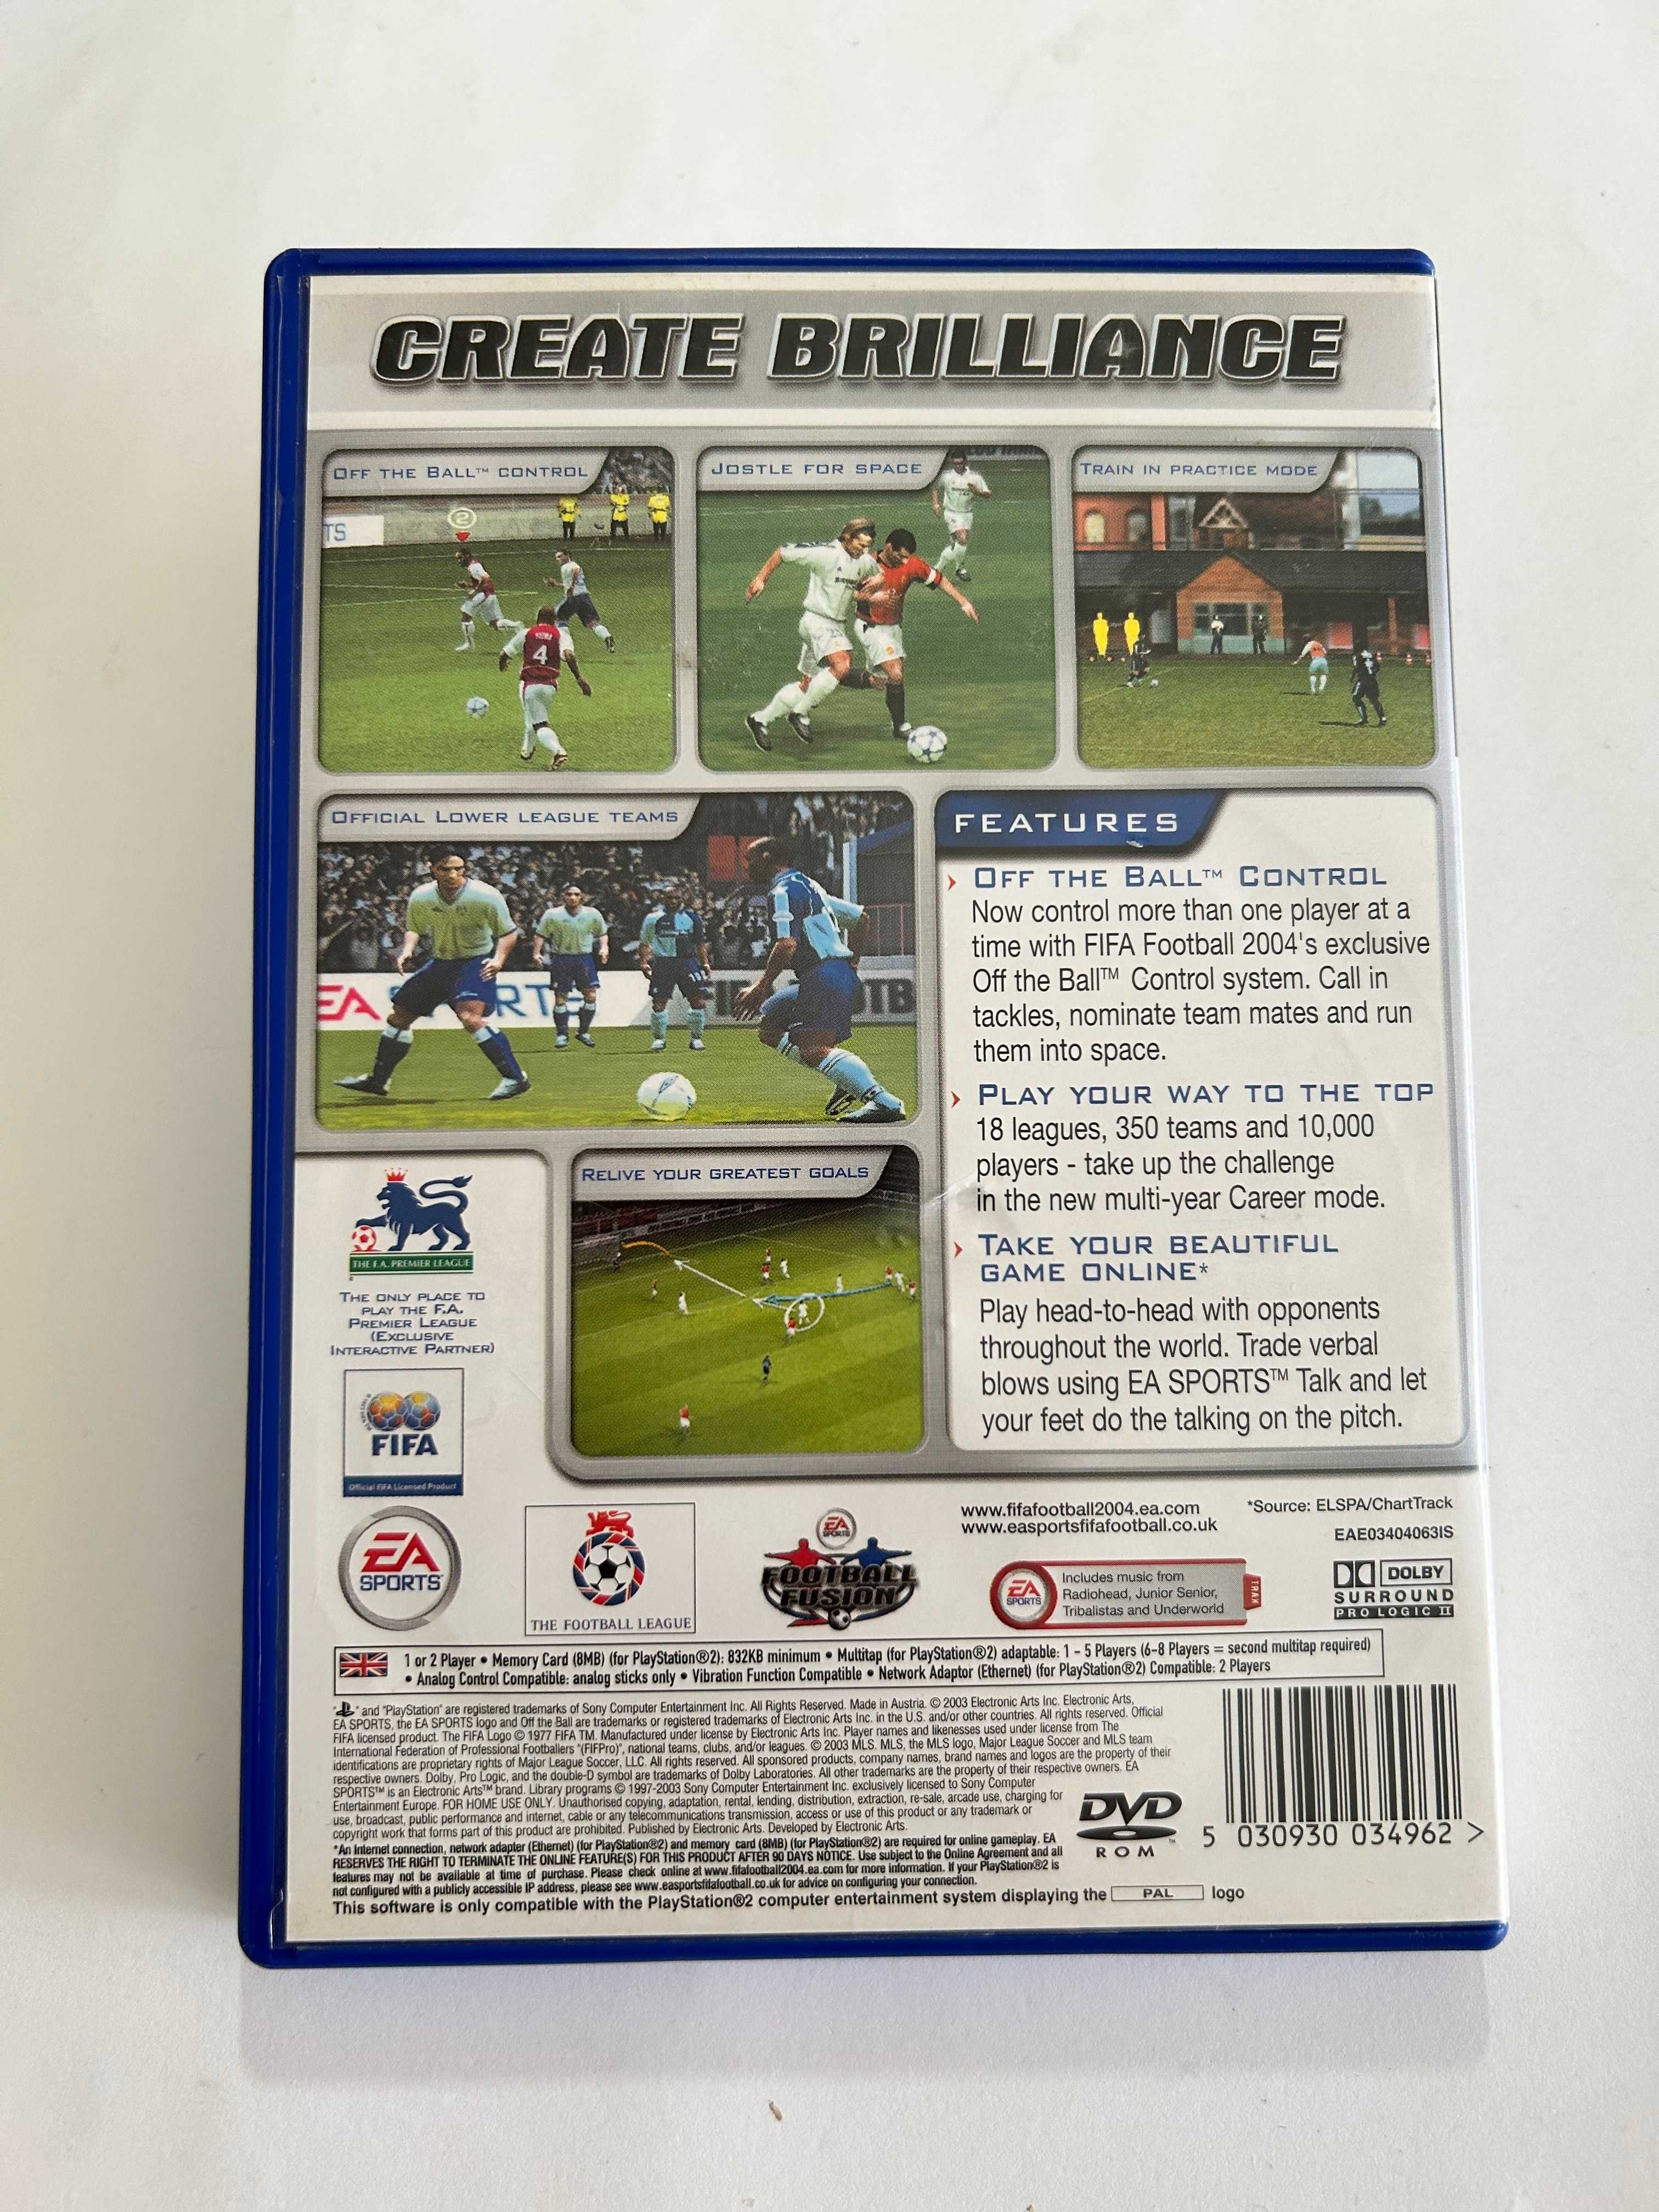 Fifa 2004 PS2 Kalisz